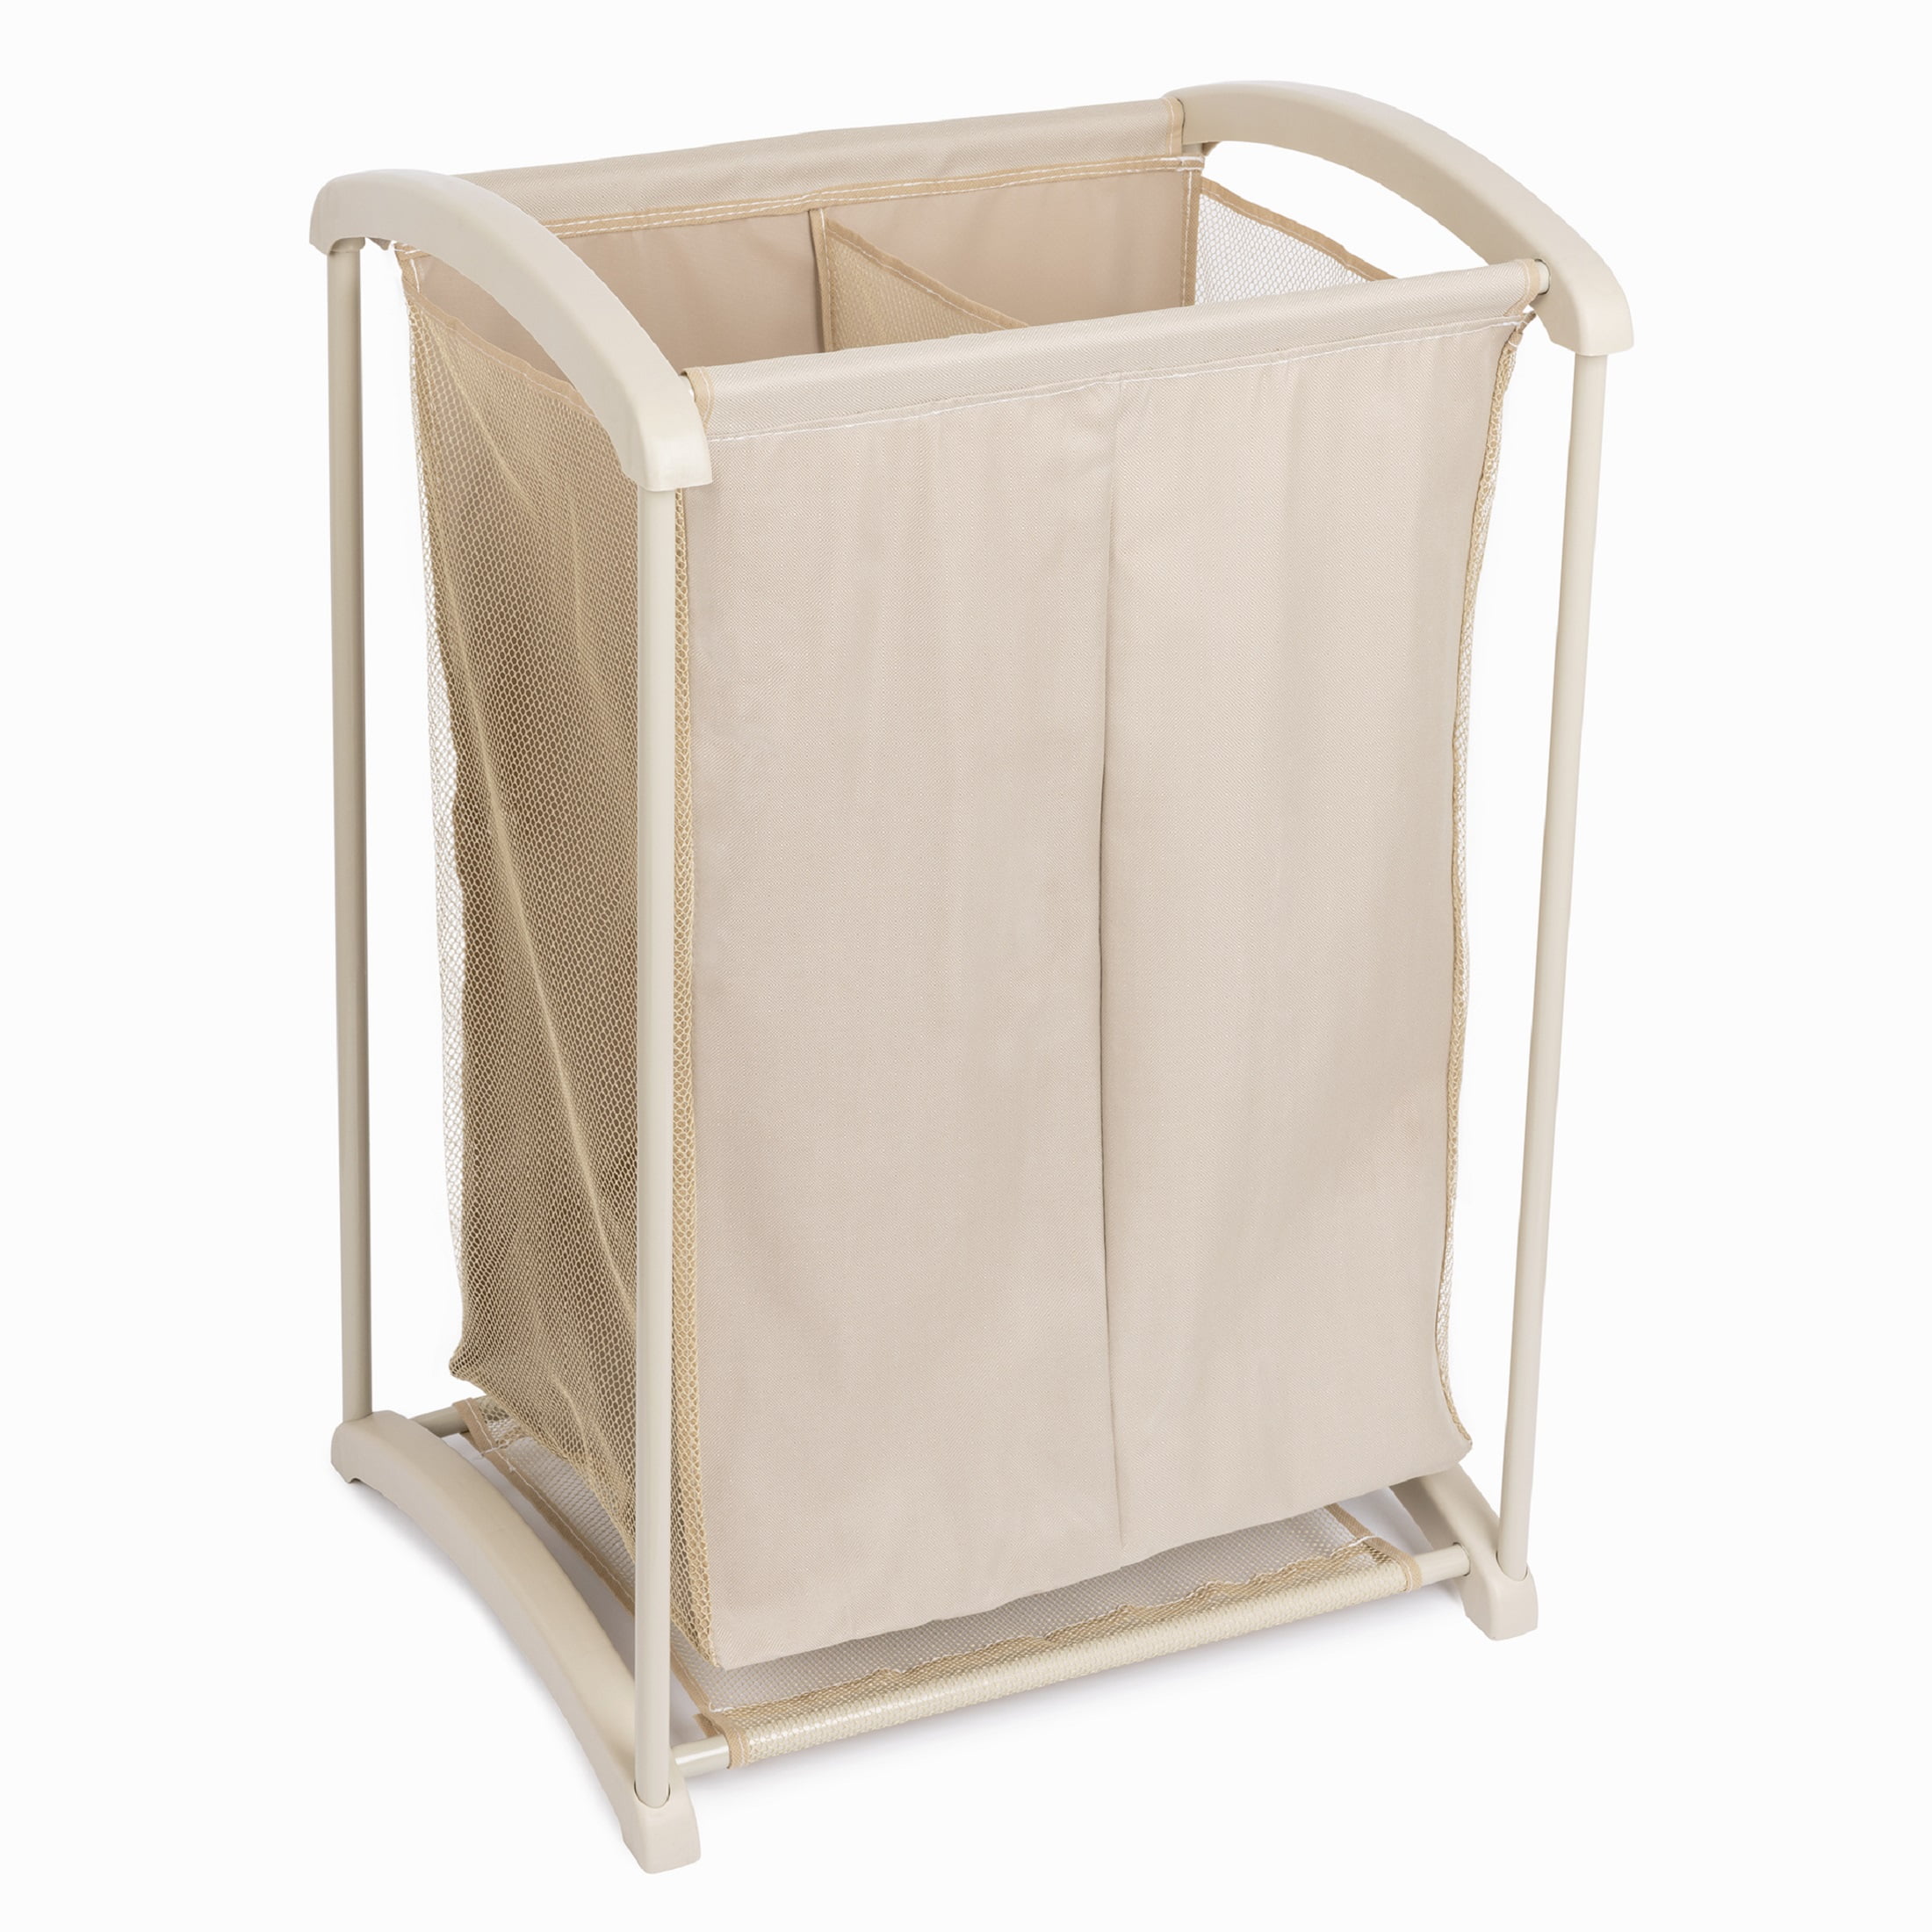 1pc Beige Foldable Iron Frame Laundry Basket, Multi-purpose